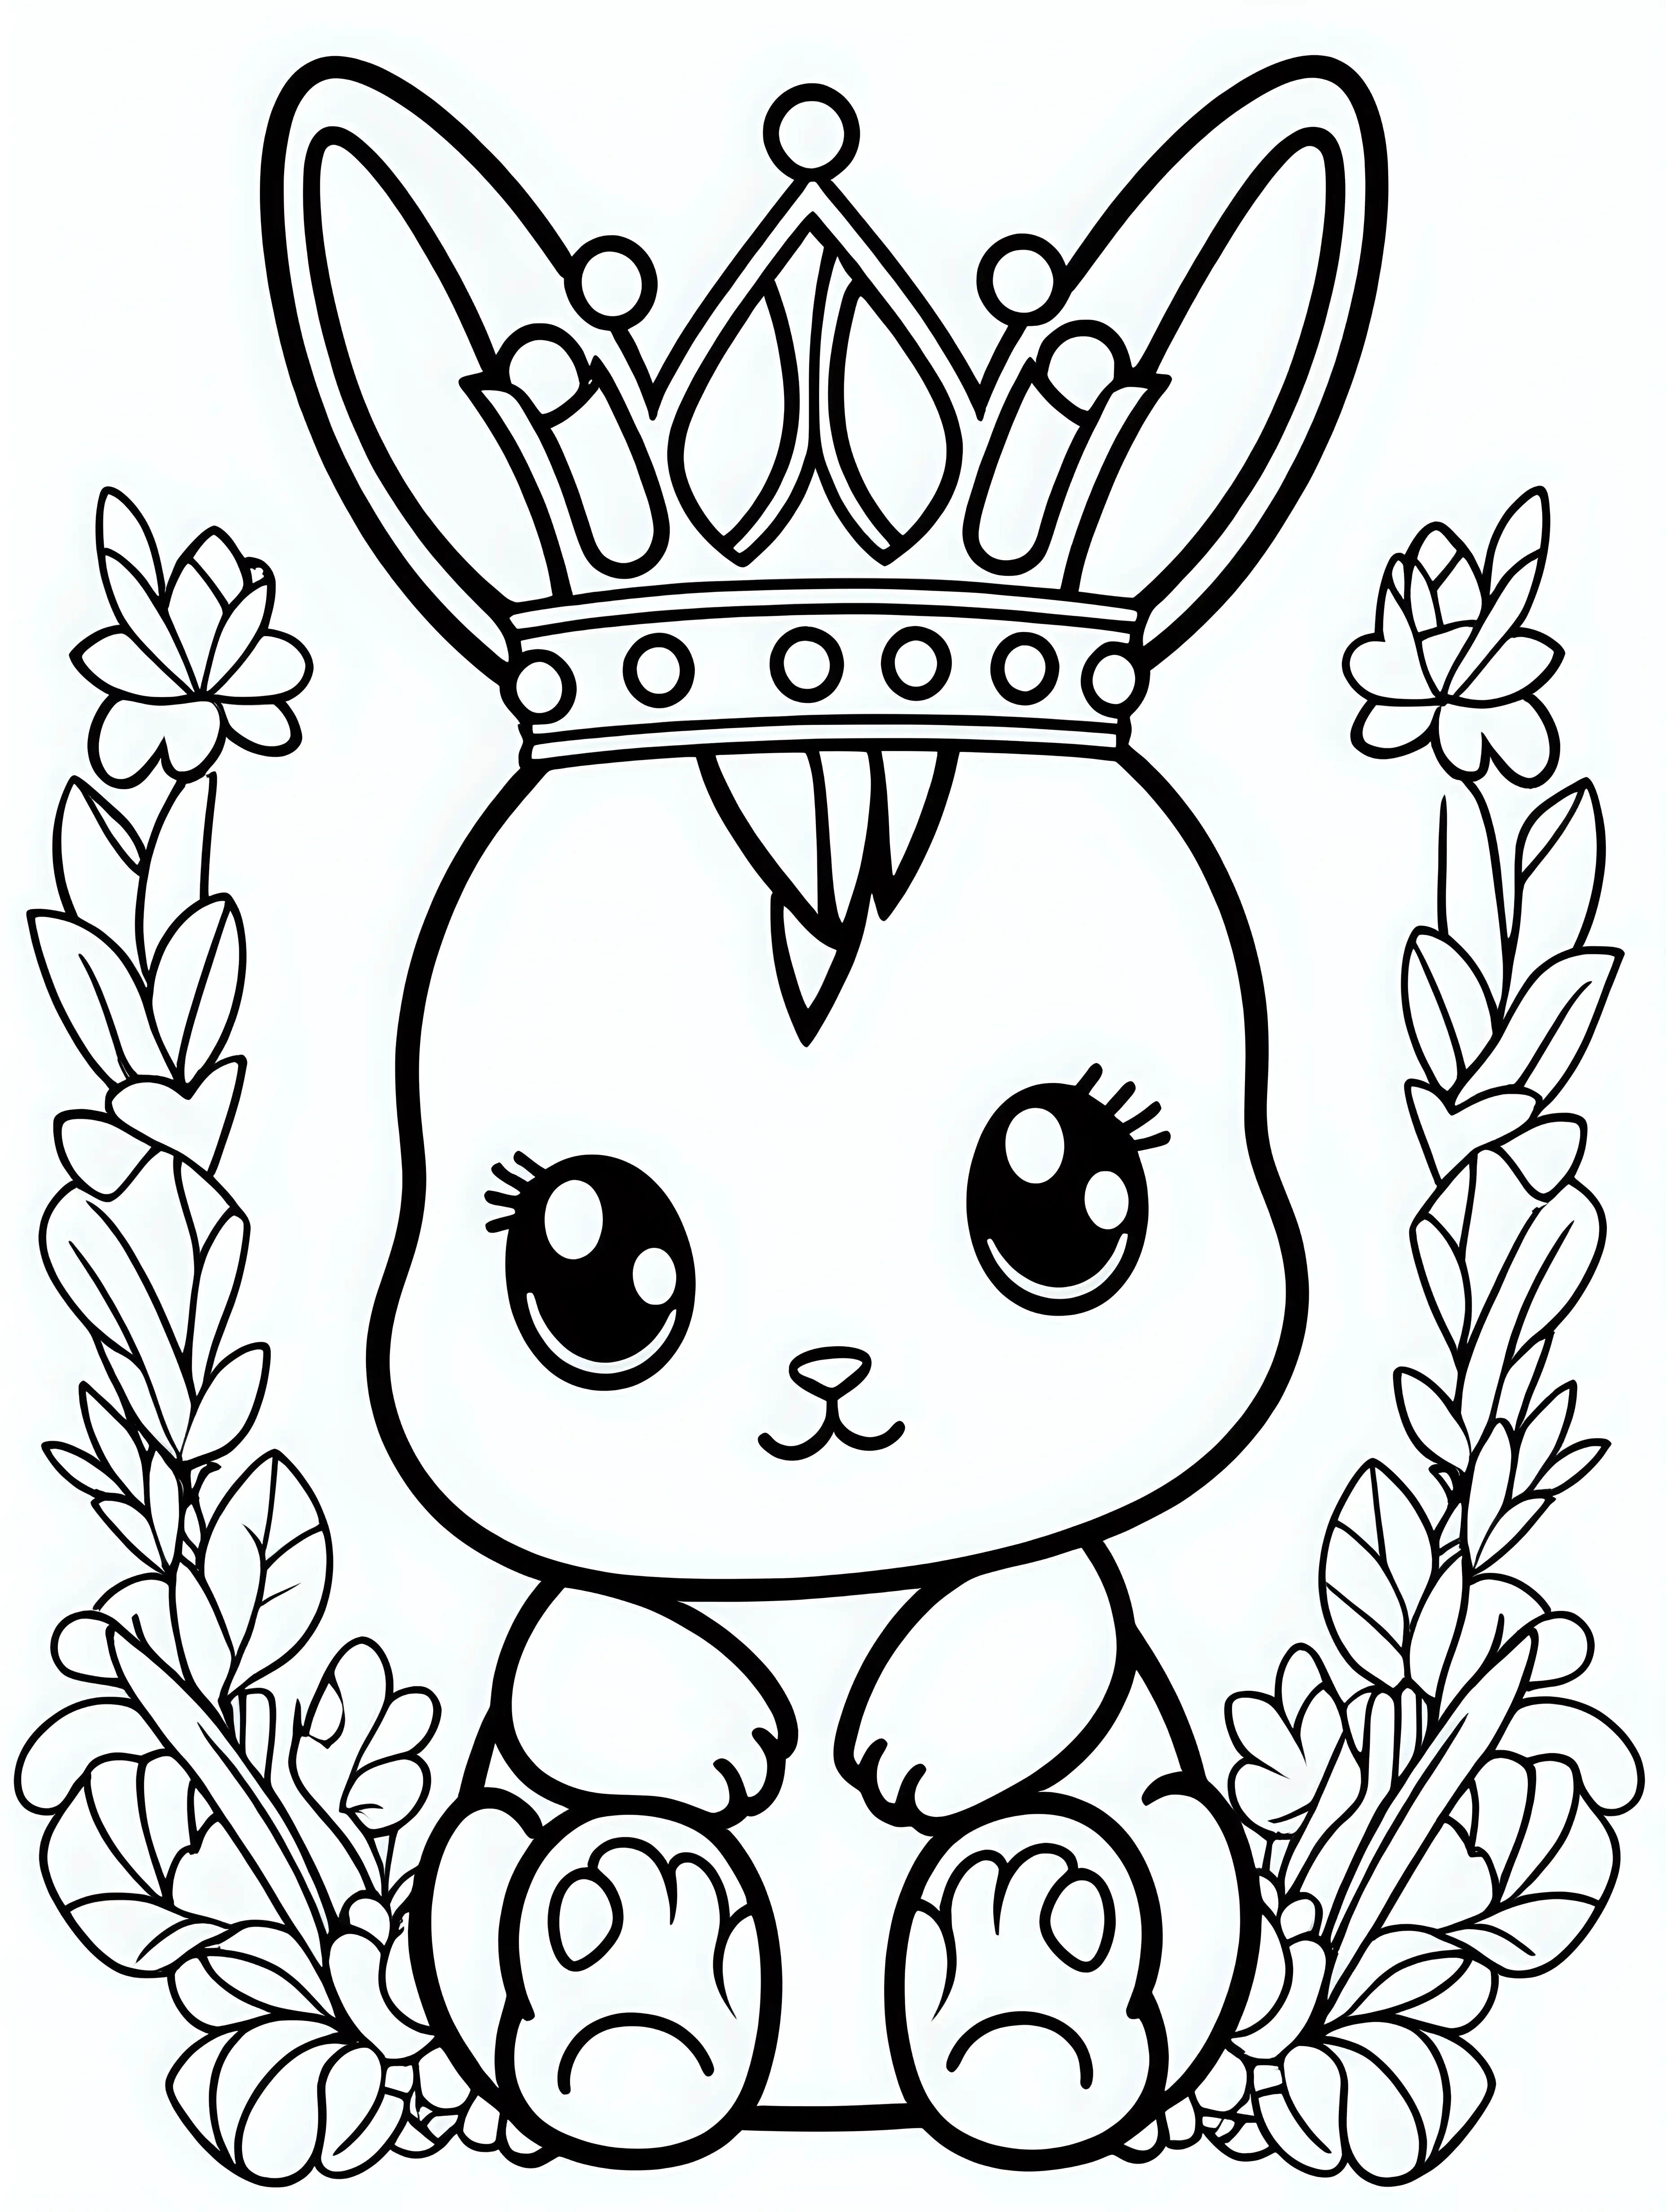 Adorable Kawaii Bunny Coloring Page with Crown for Kids